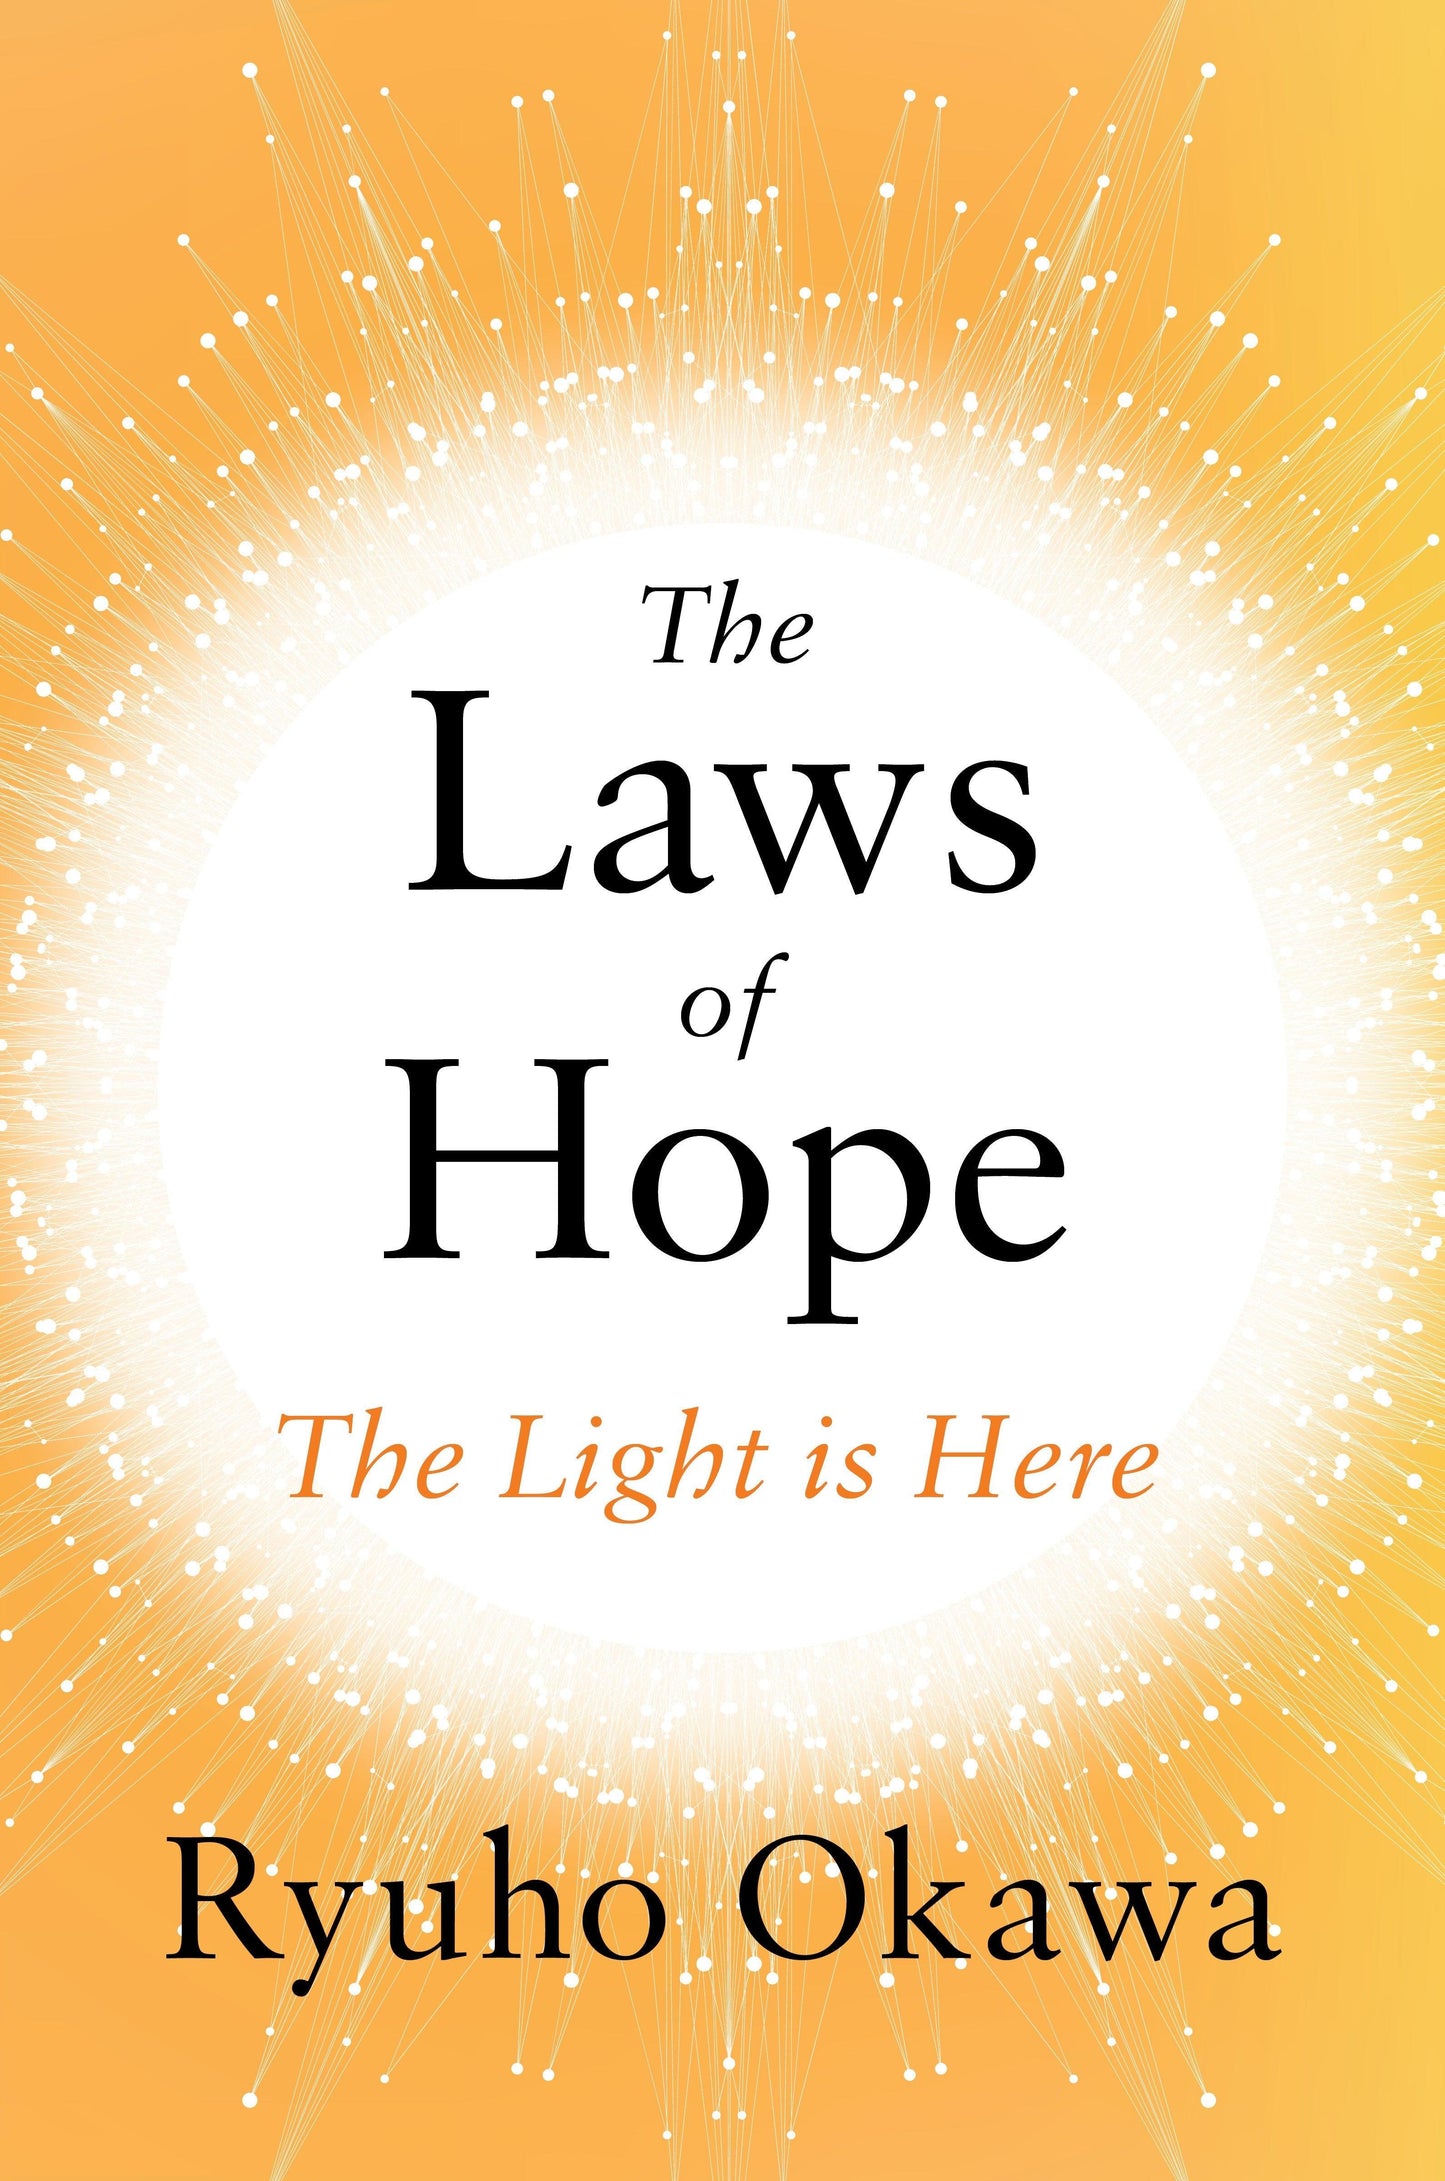 The Laws of Hope : The Light is Here, Ryuho Okawa, English - IRH Press International